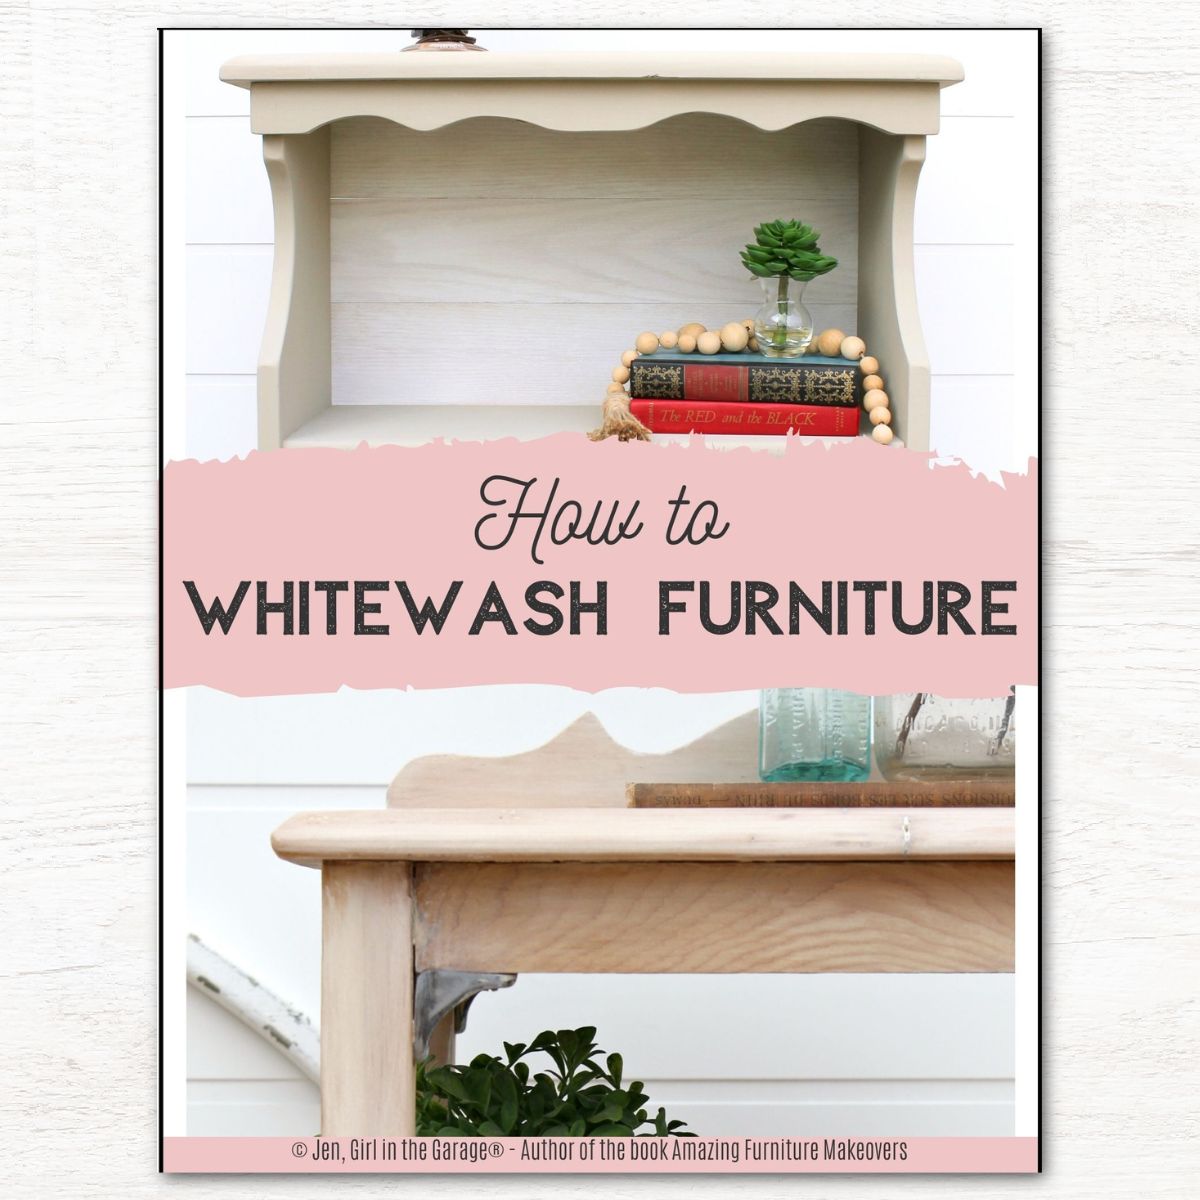 How to Whitewash Furniture